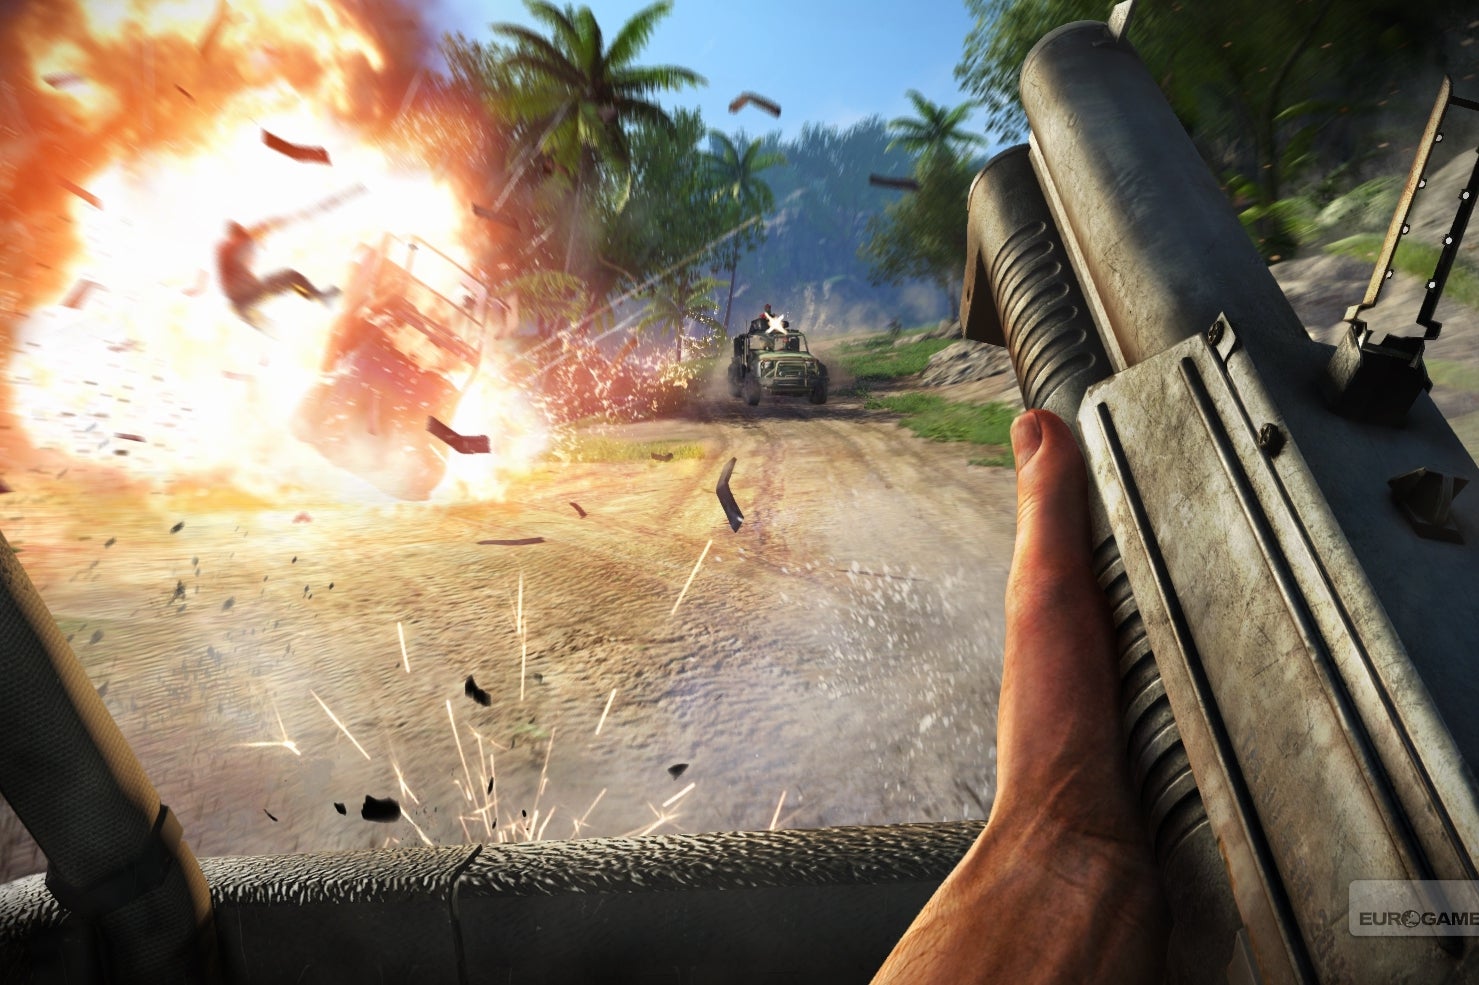 Obrazki dla Far Cry 3 trafi na PS4 i Xbox One